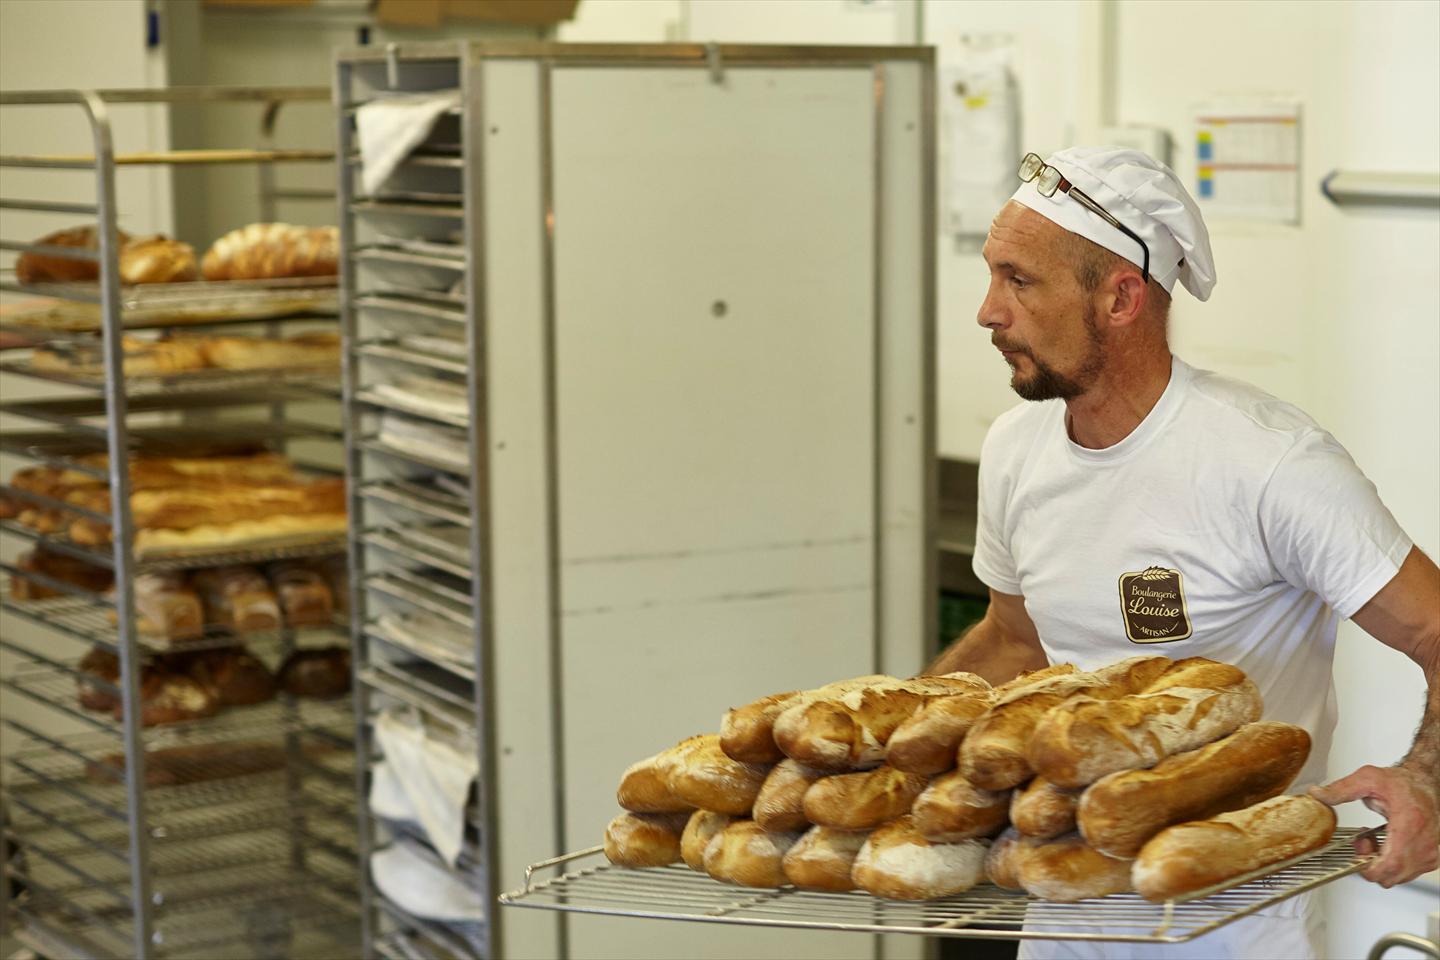 offre emploi cdi boulanger morbihan 56 recrutement en cdi par boulangerie louise ouestjob com